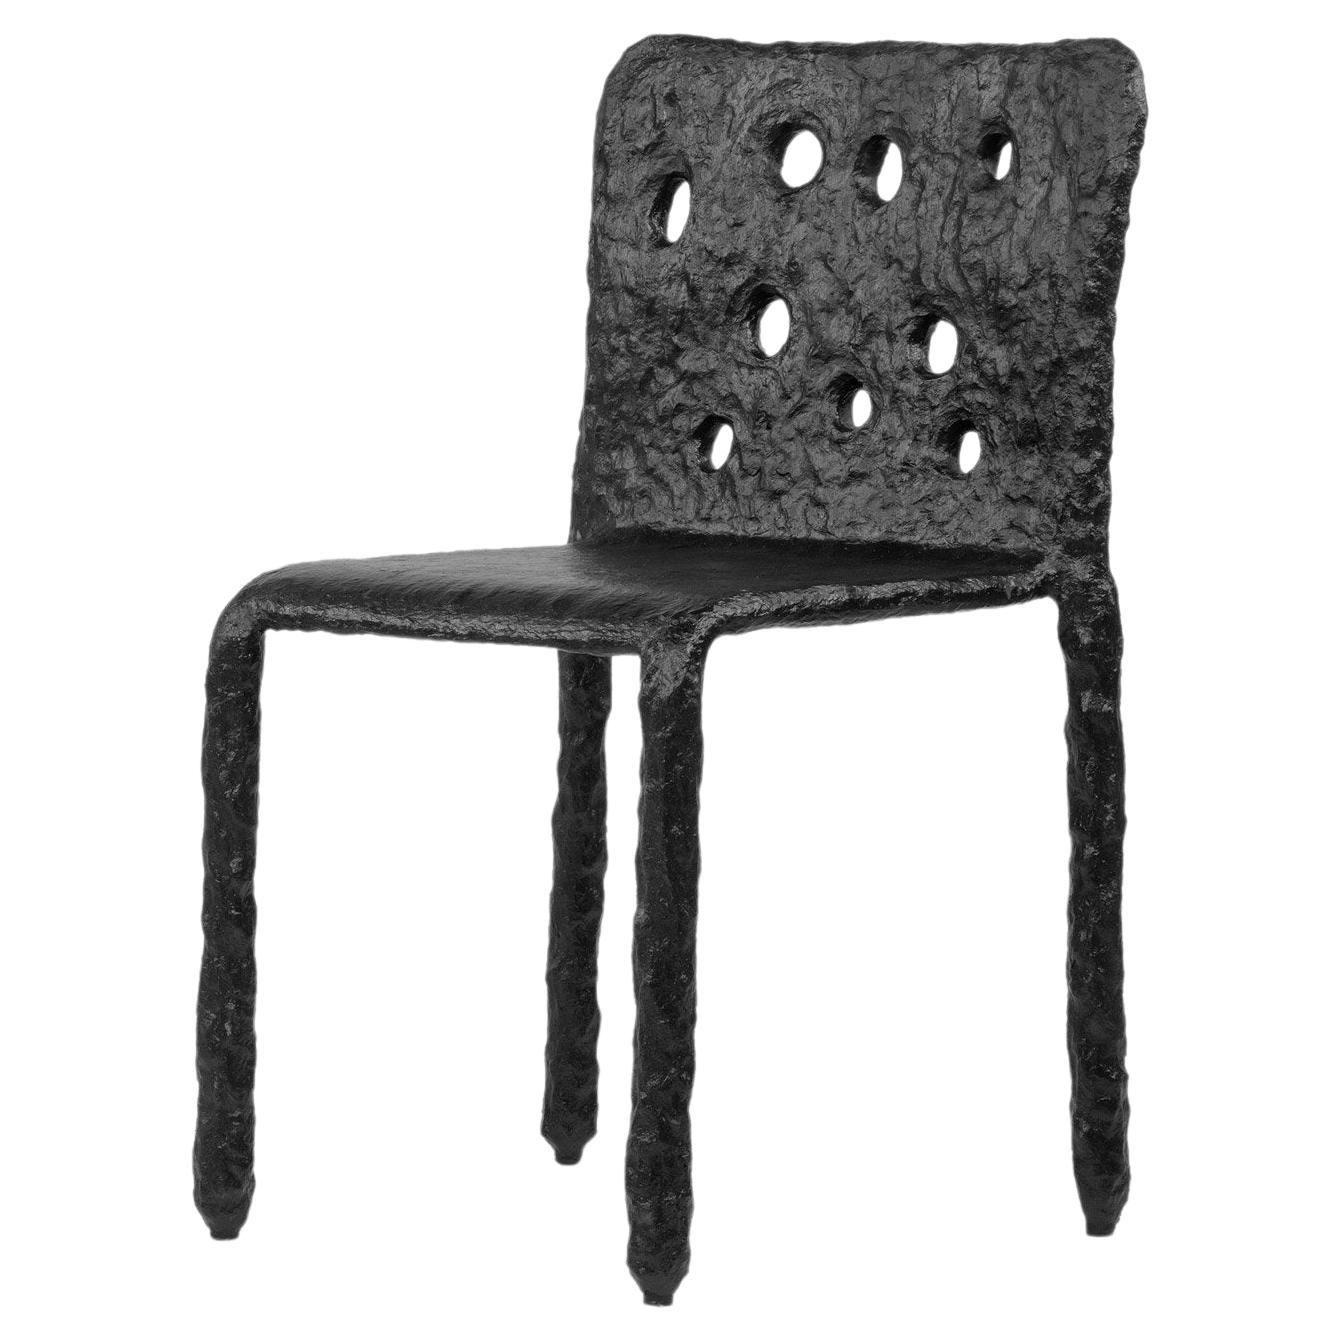 Sculpted Contemporary Black Chair, Ztista Chair by Faina